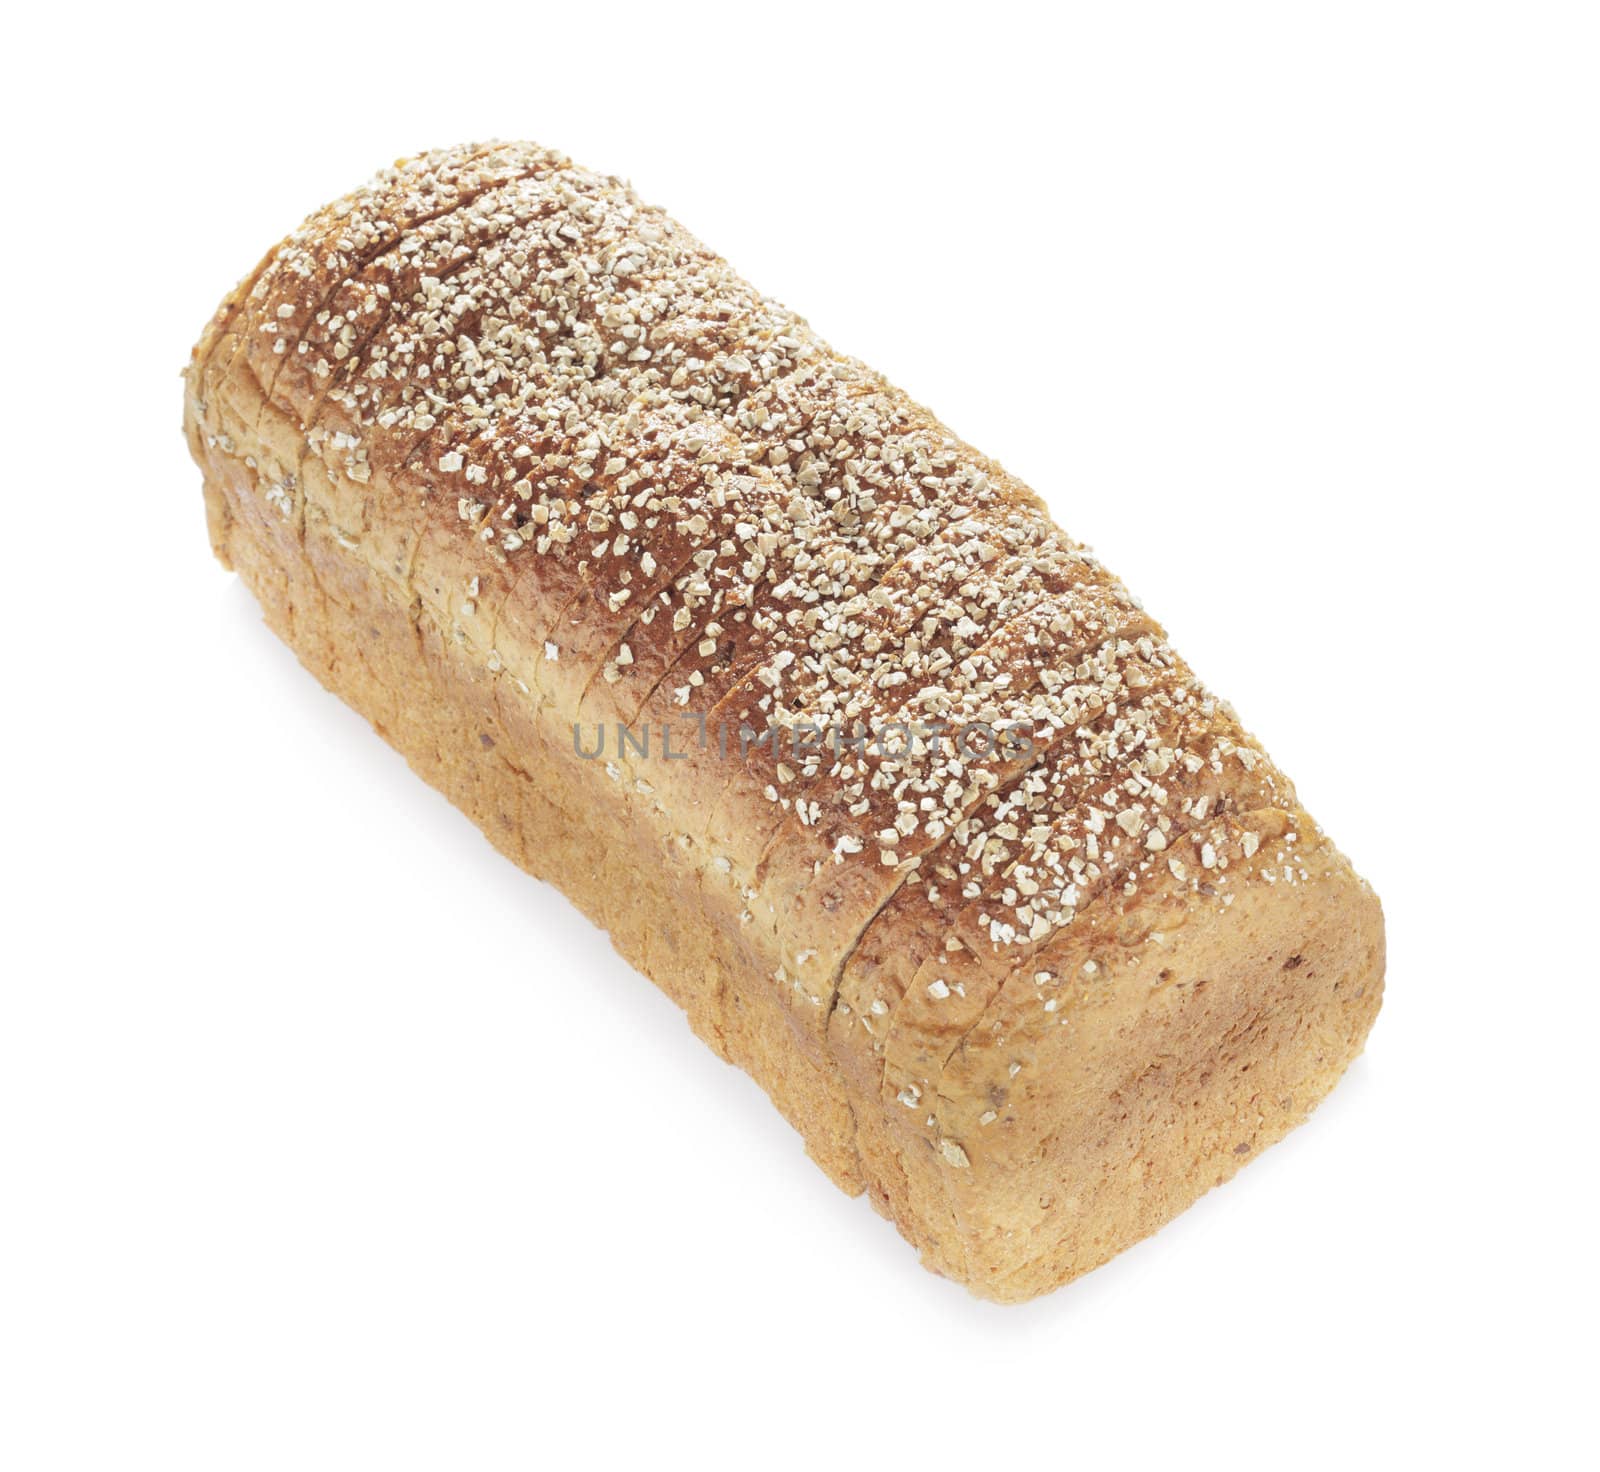 Bread by Stocksnapper